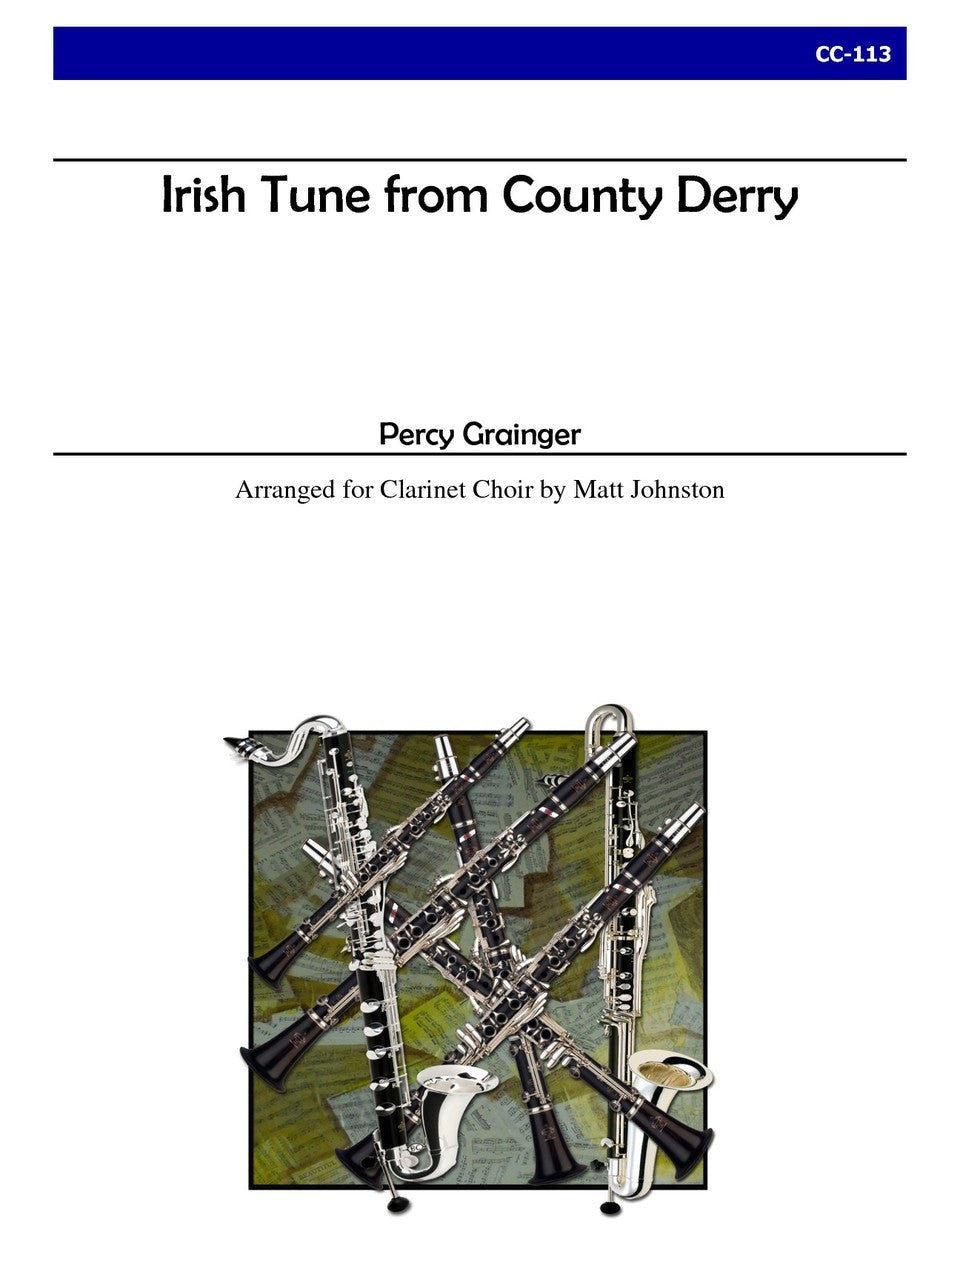 Grainger (arr. Matt Johnston) - Irish Tune from County Derry for Clarinet Choir